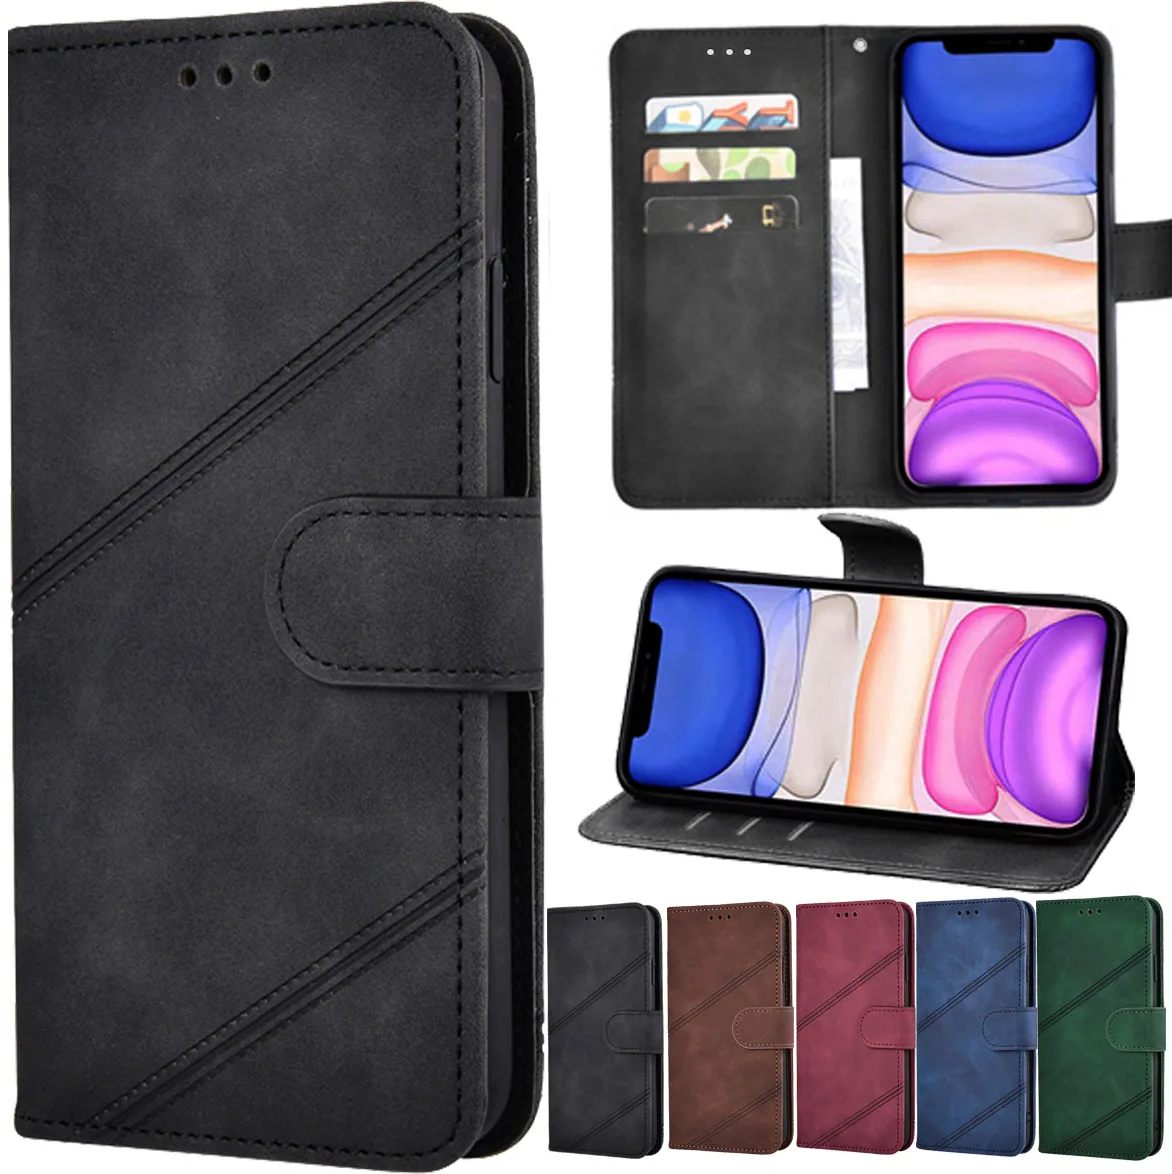 

Wallet Leather Case For Wiko T3 T10 T50 Y50 Y51 Y52 Y60 Y61 Y62 Y70 Y80 Y81 Y82 Plus View 4 Lite 5 Plus 3 Lite 2 GO Cover